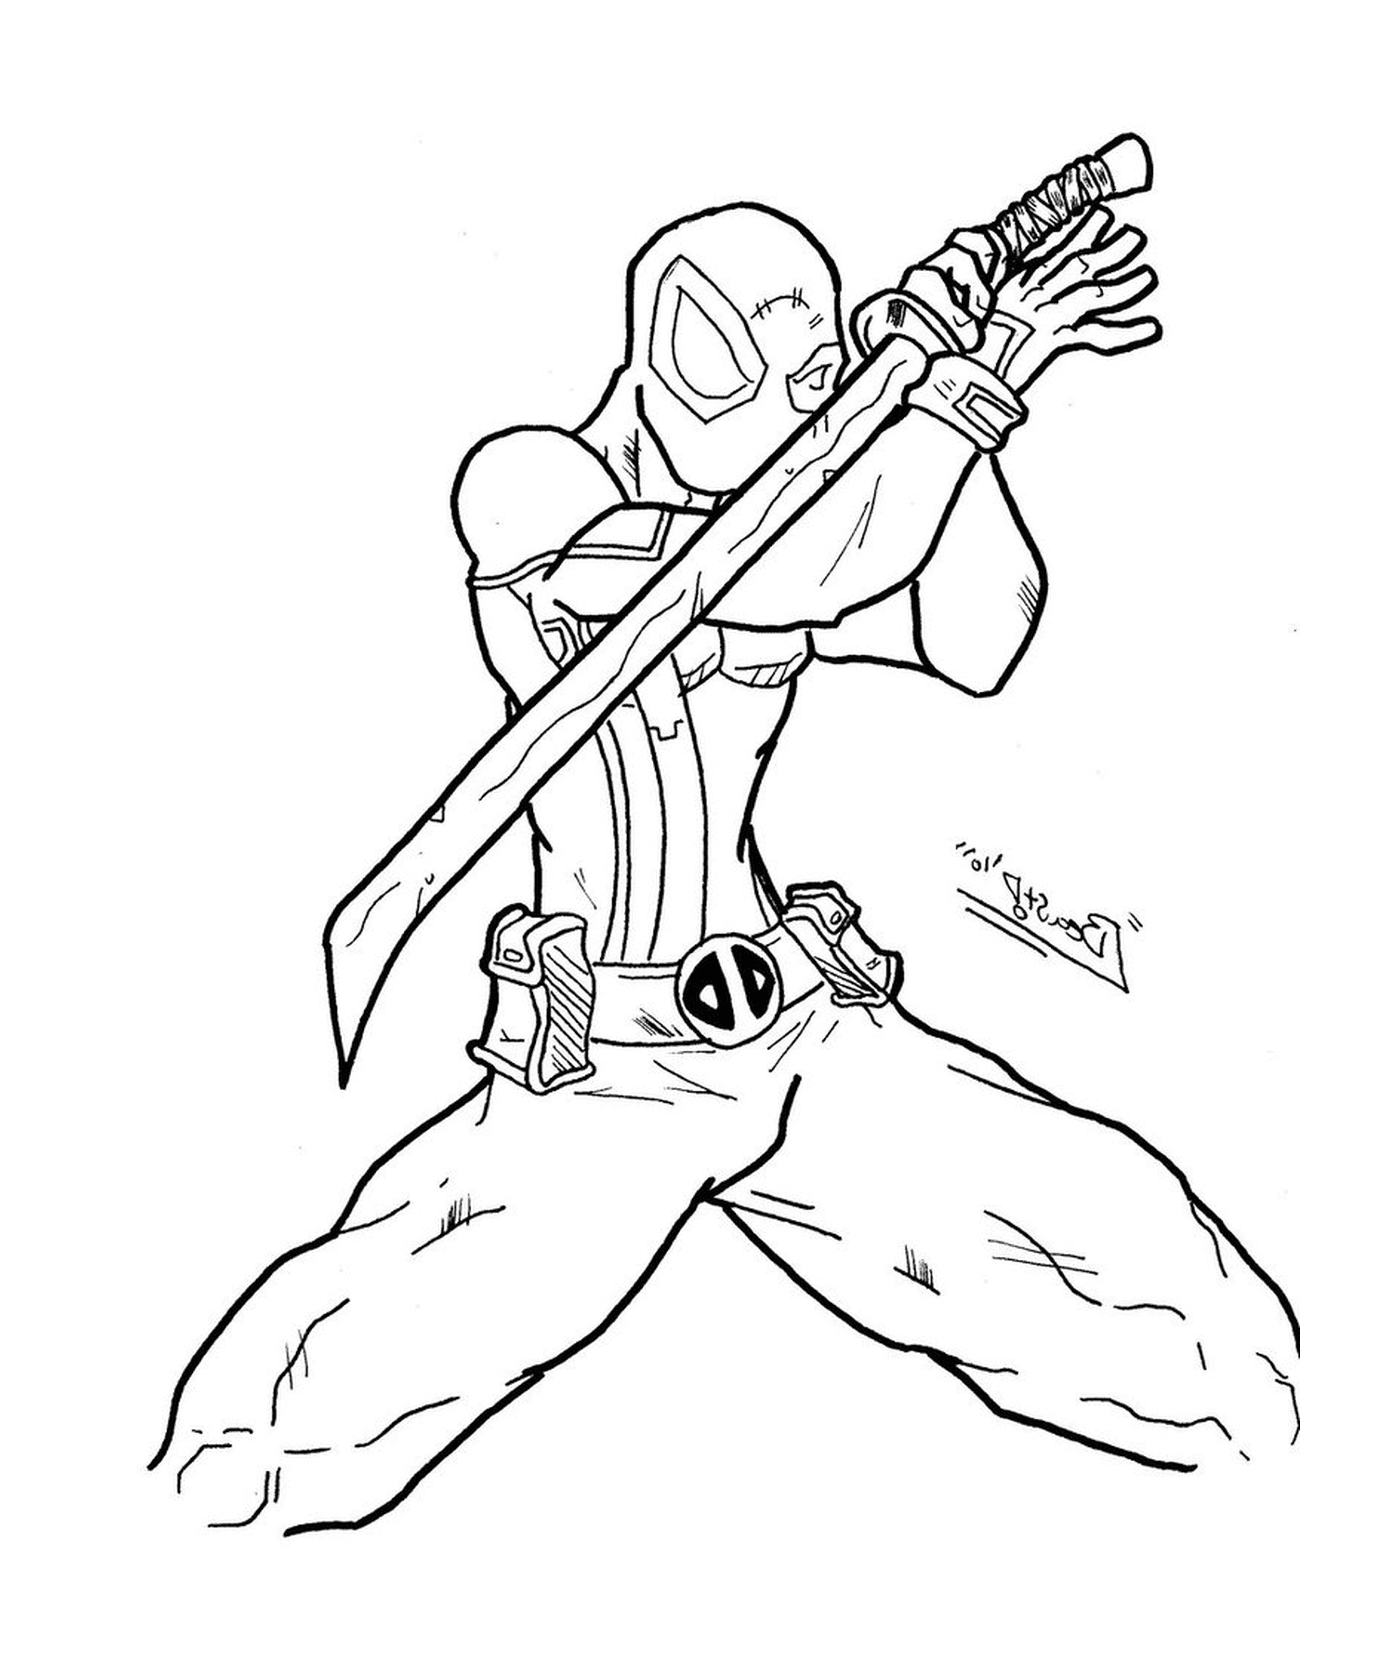  Deadpool disfrazado de ninja 